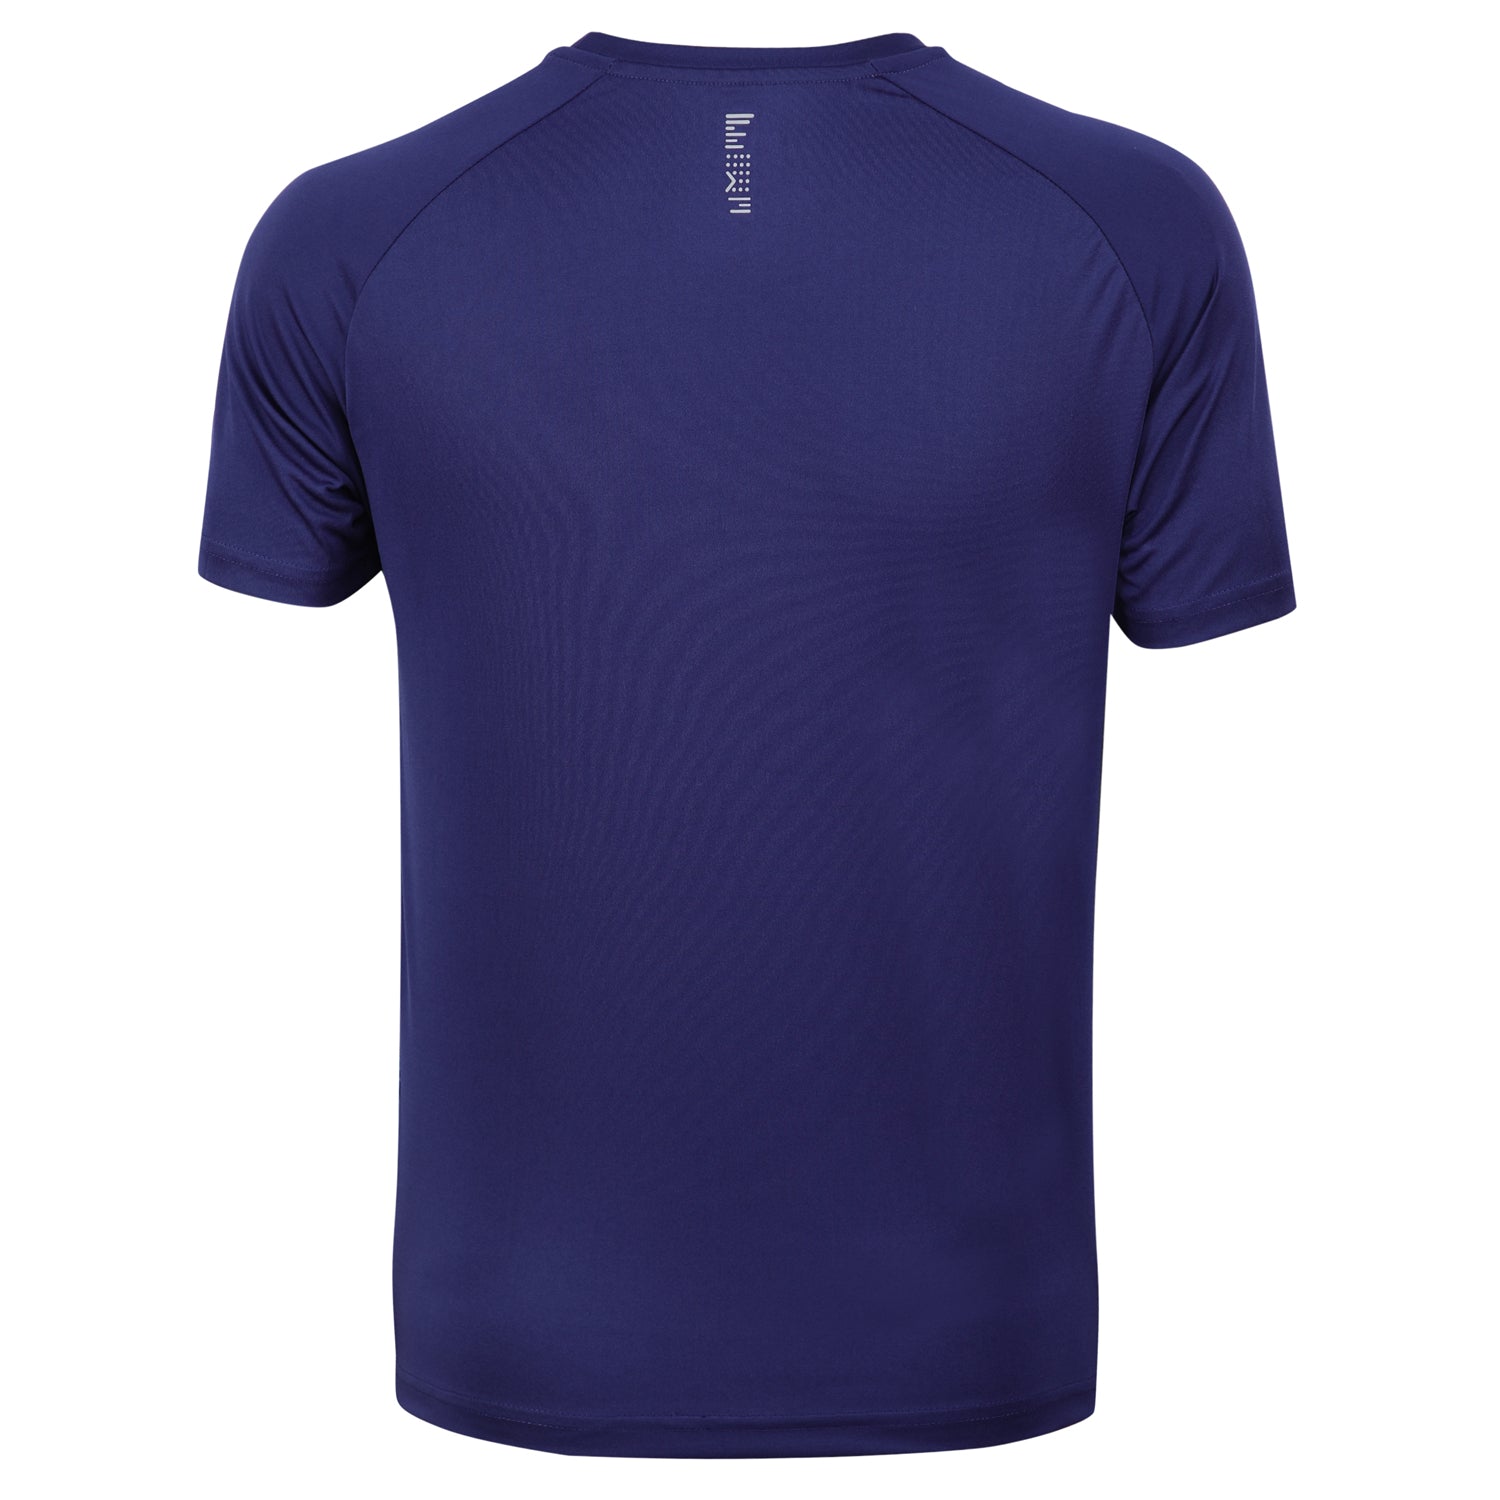 Yonex Round Neck Badminton T-Shirt, Patriot Blue - Best Price online Prokicksports.com